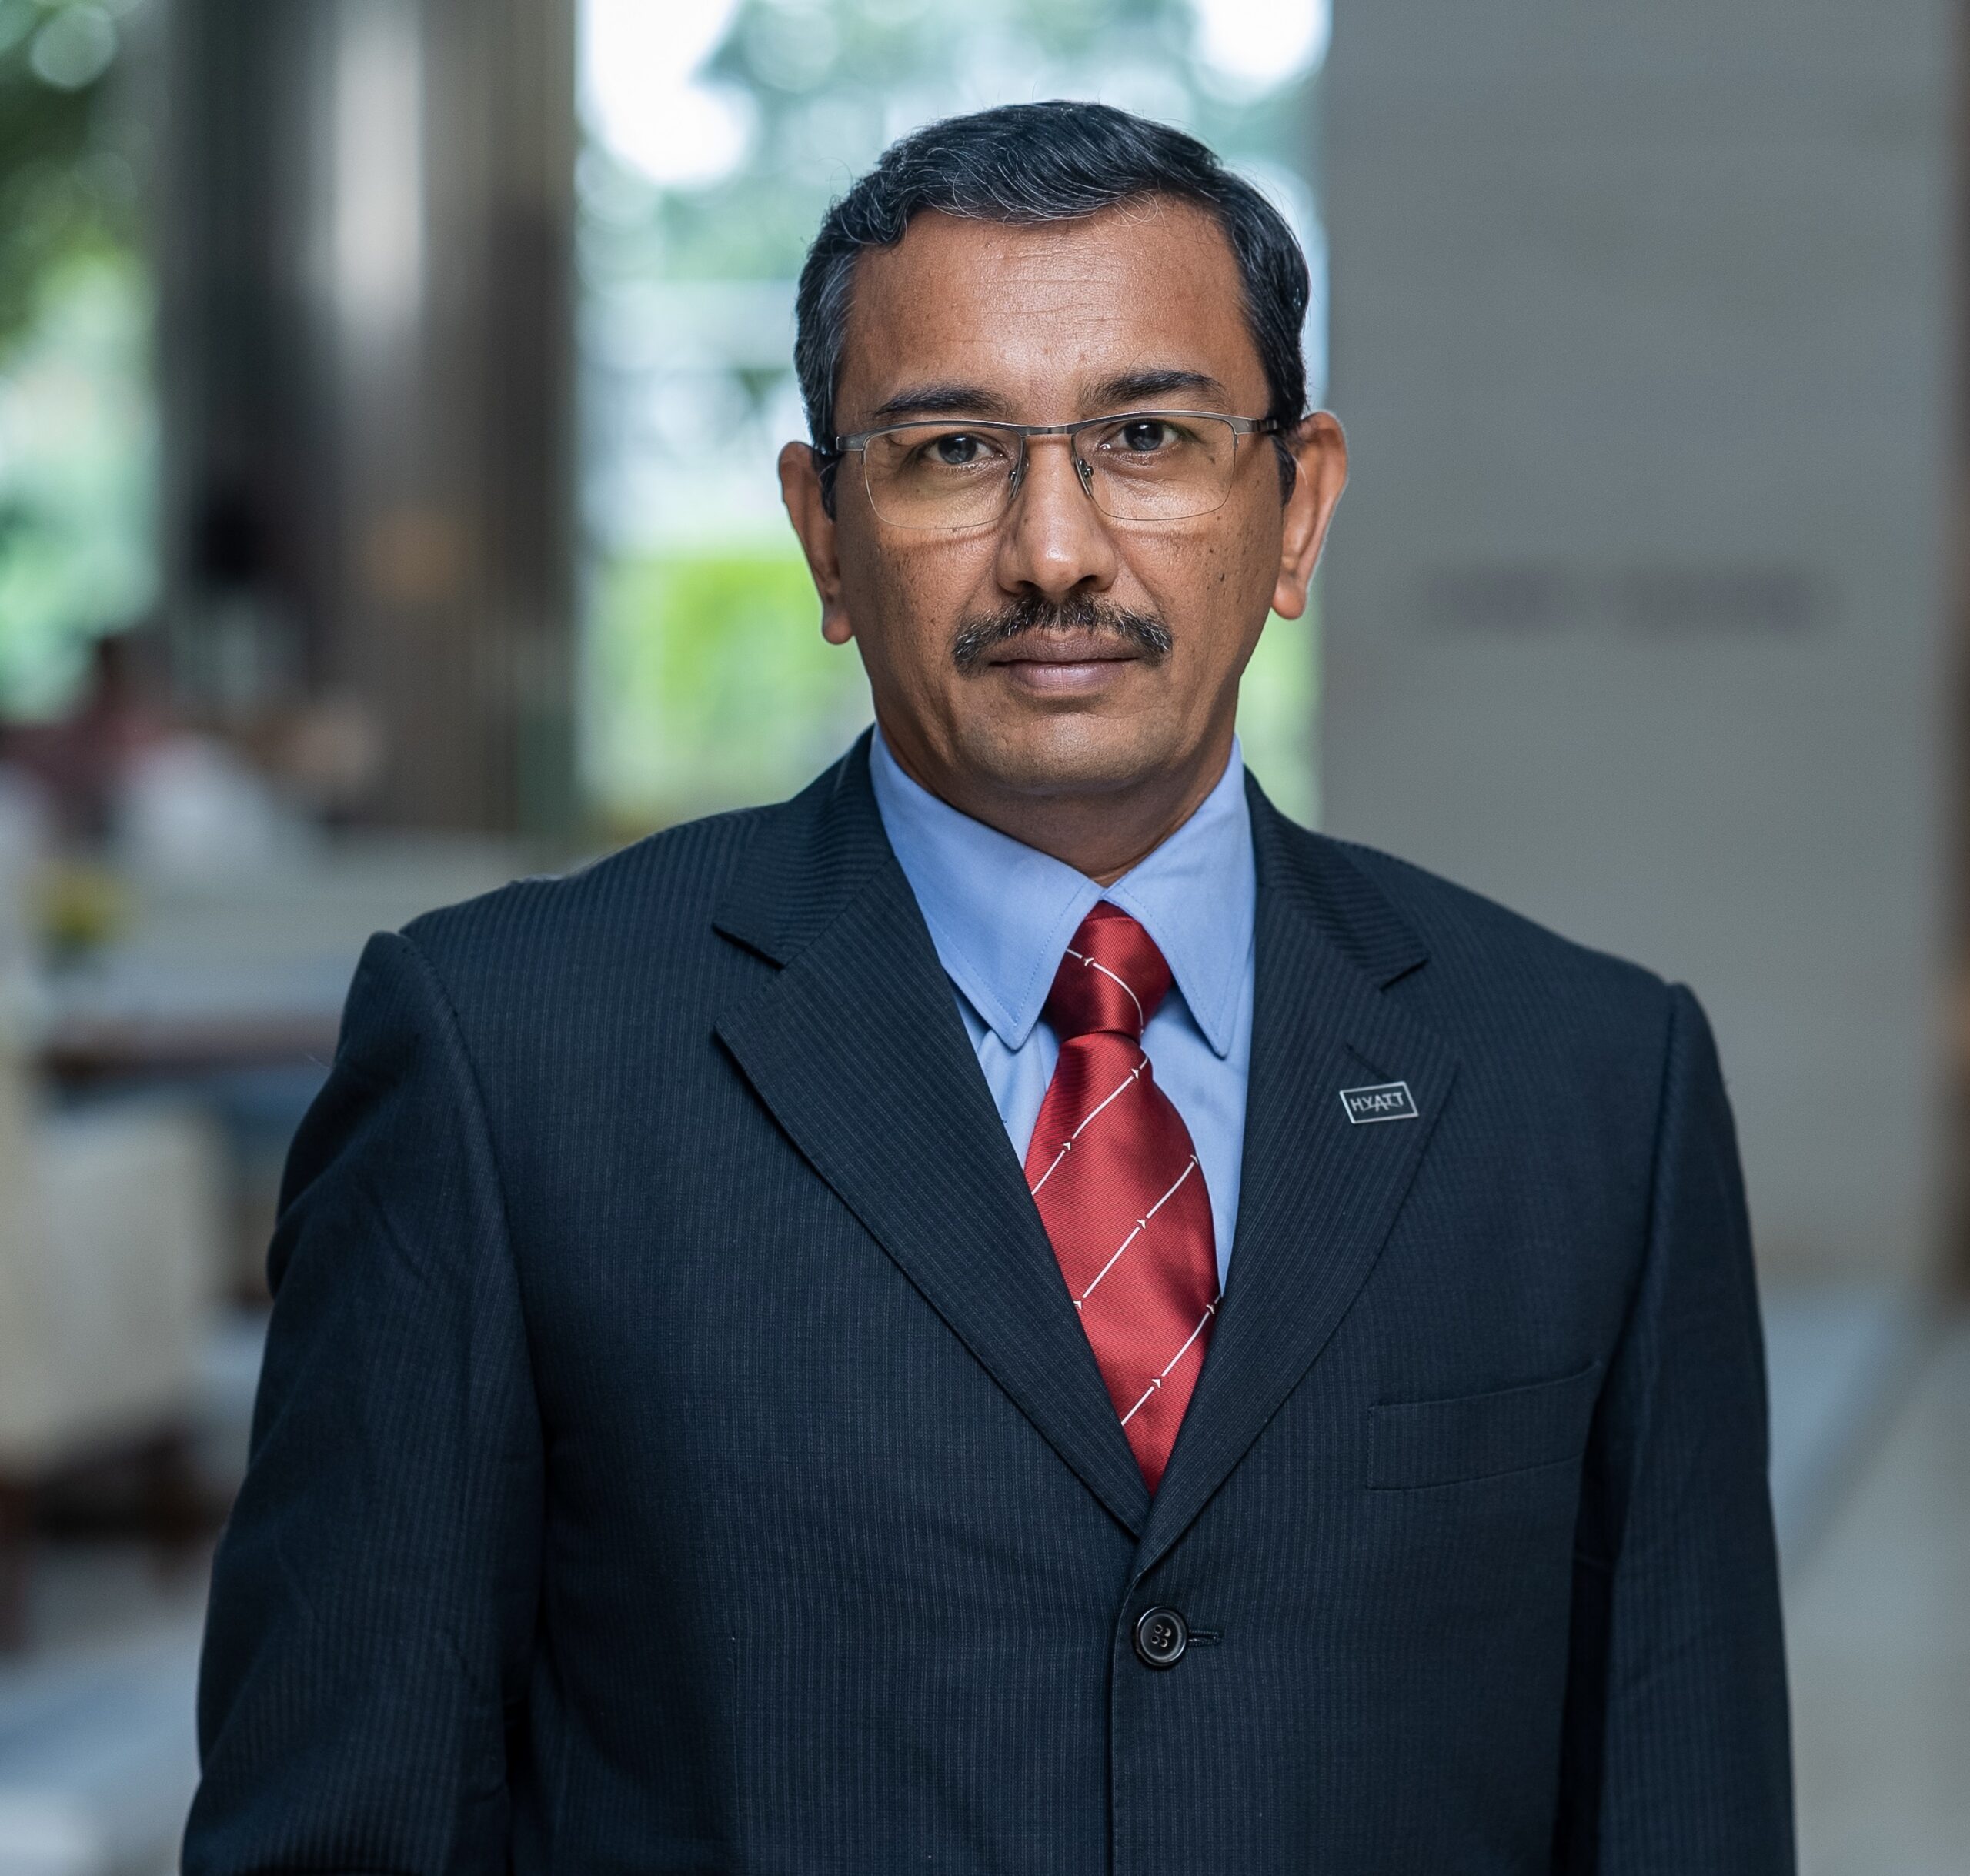 Rajkumar Ganesan takes over as the Director of Finance at Hyatt Regency, Chennai